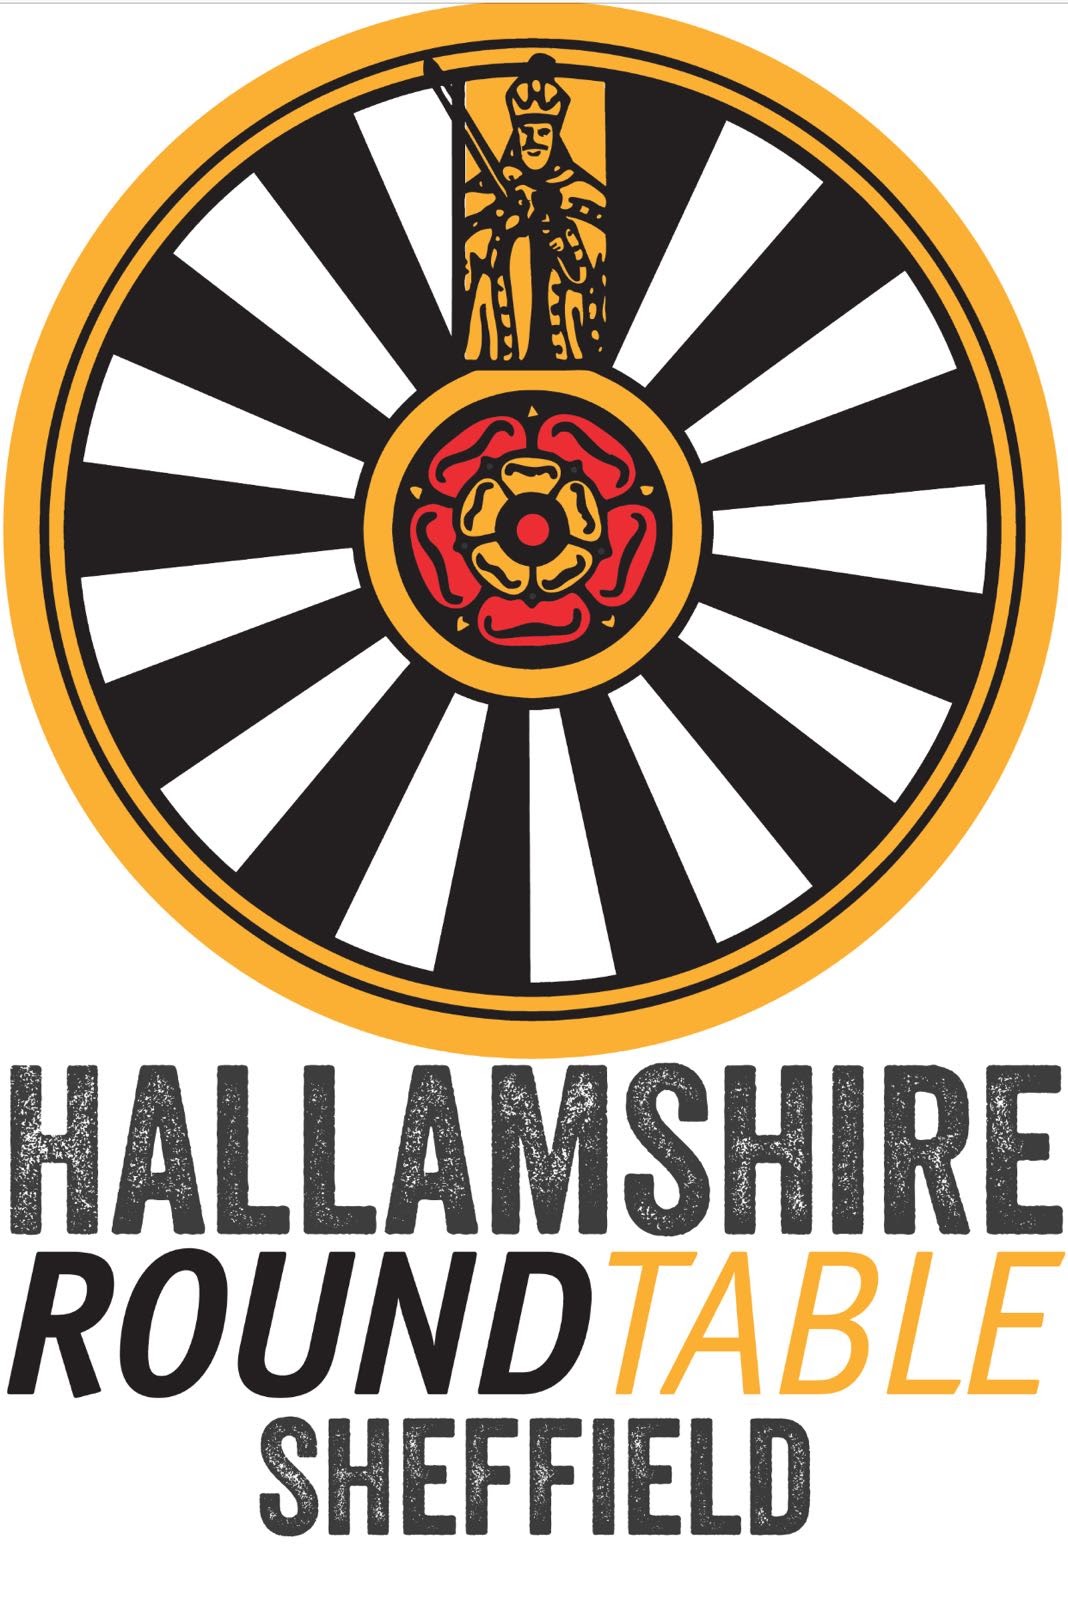 Hallumshire Round Table